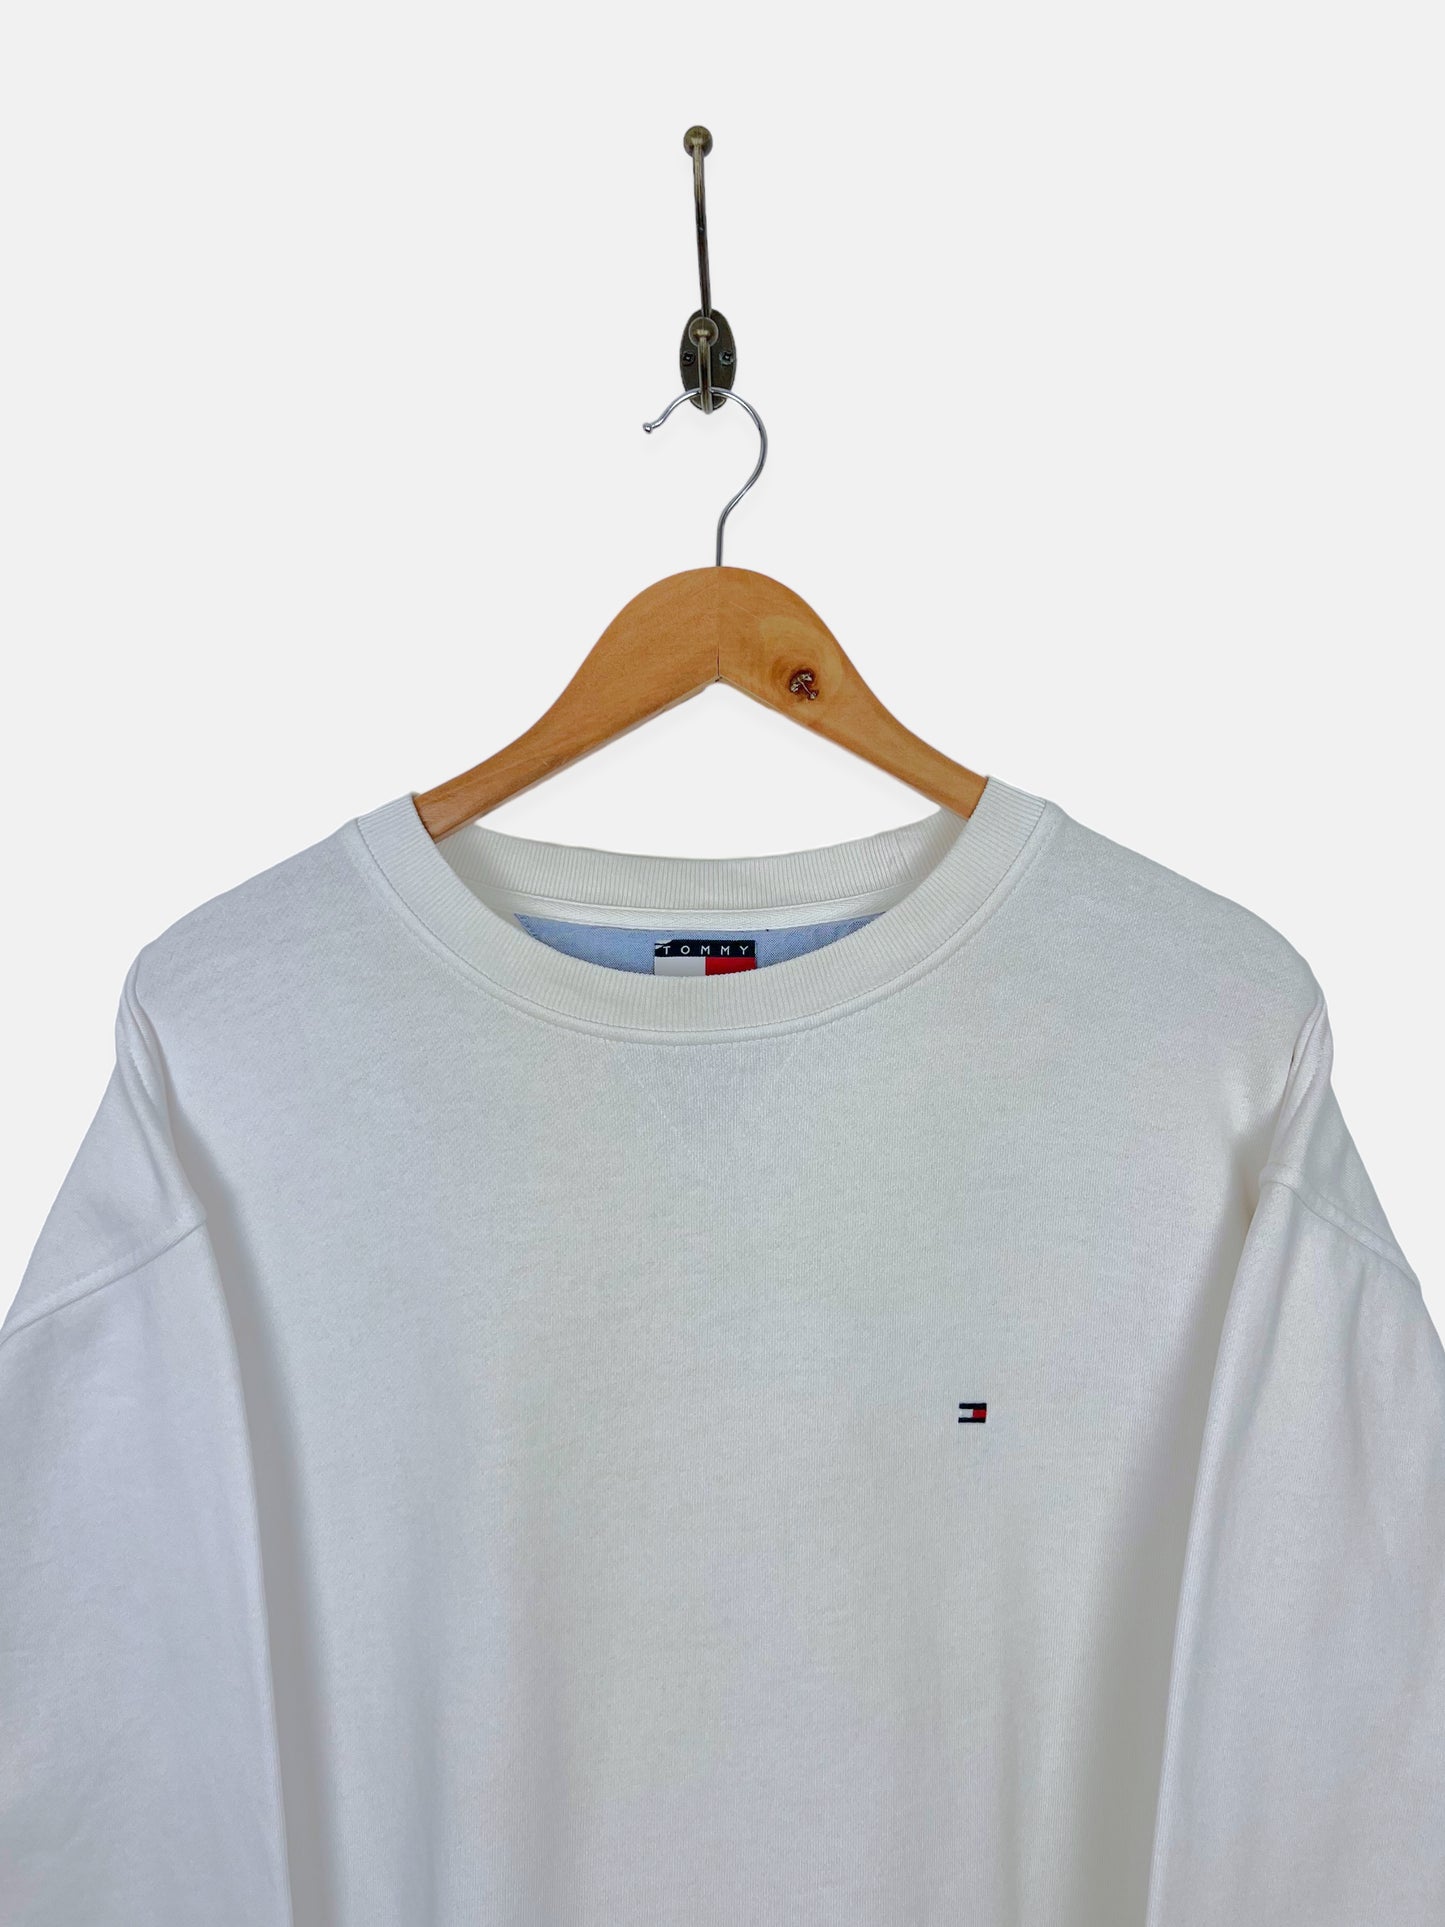 90's Tommy Hilfiger Embroidered Vintage Sweatshirt Size L-XL